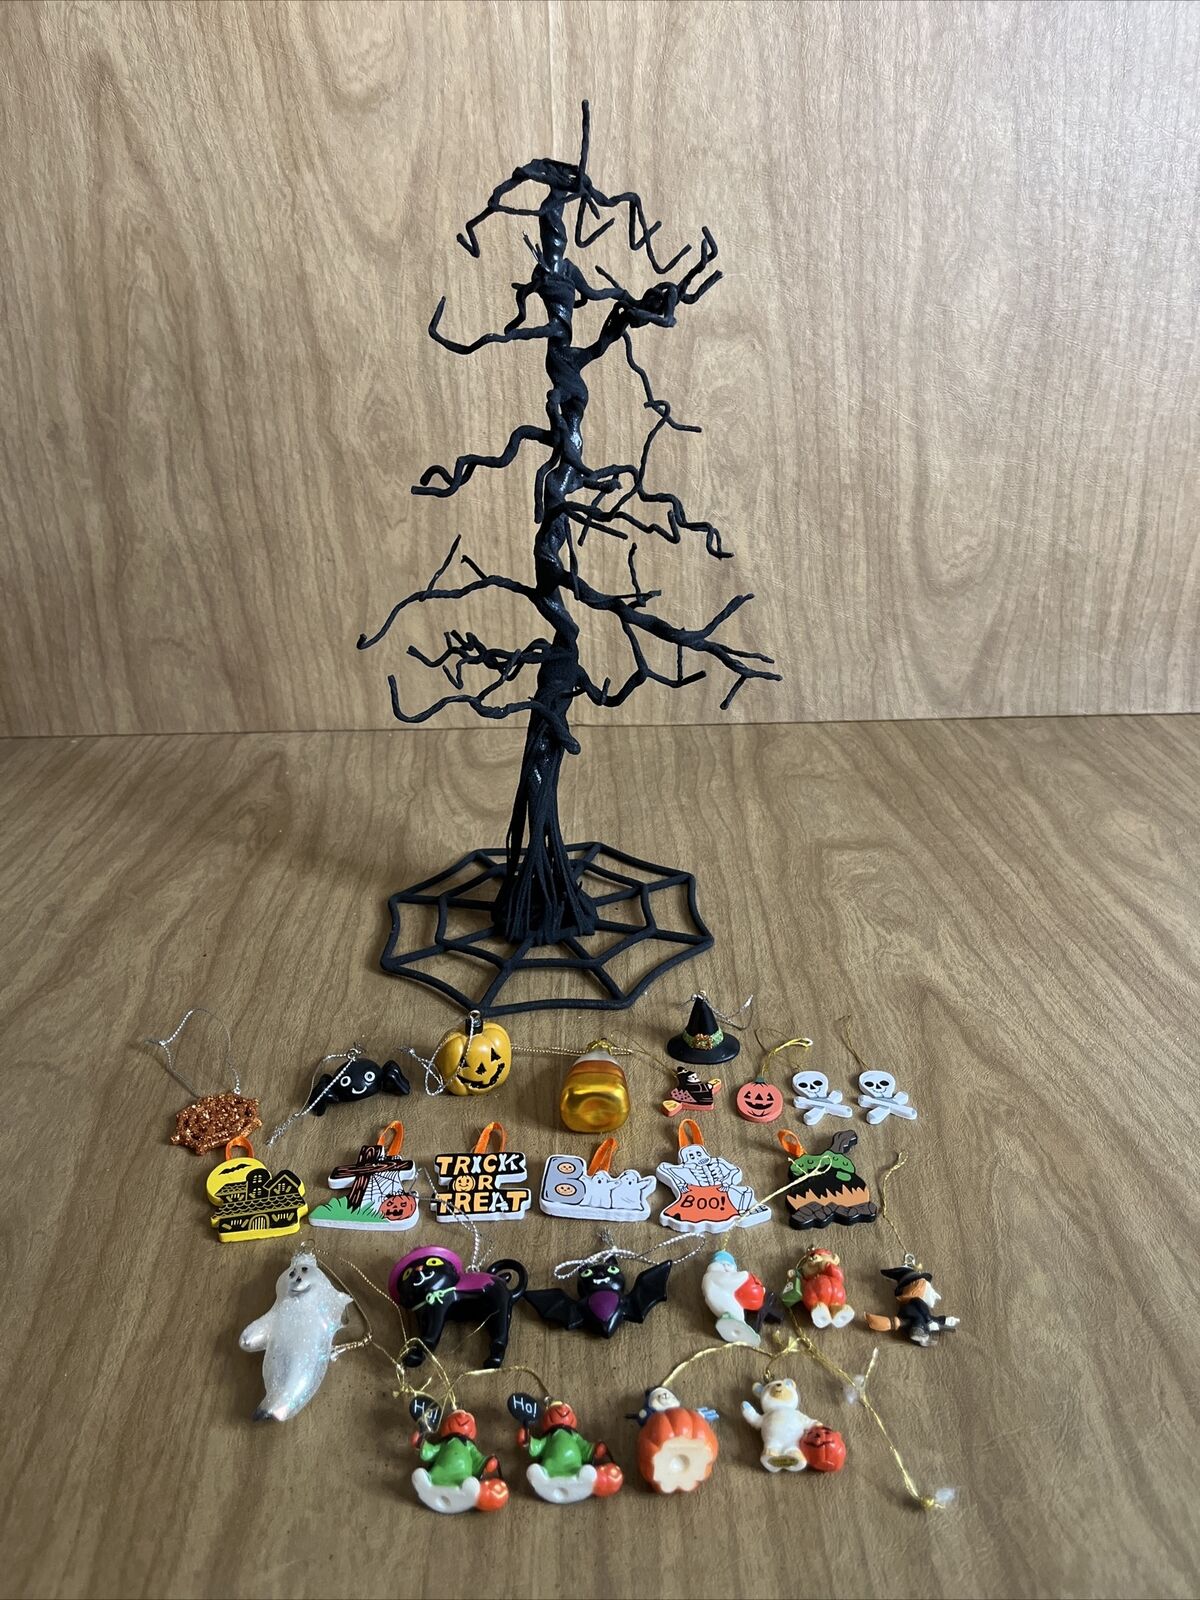 Decorative Halloween Village Tree Decor Spooky Black Twisted W 25 Mini Ornaments